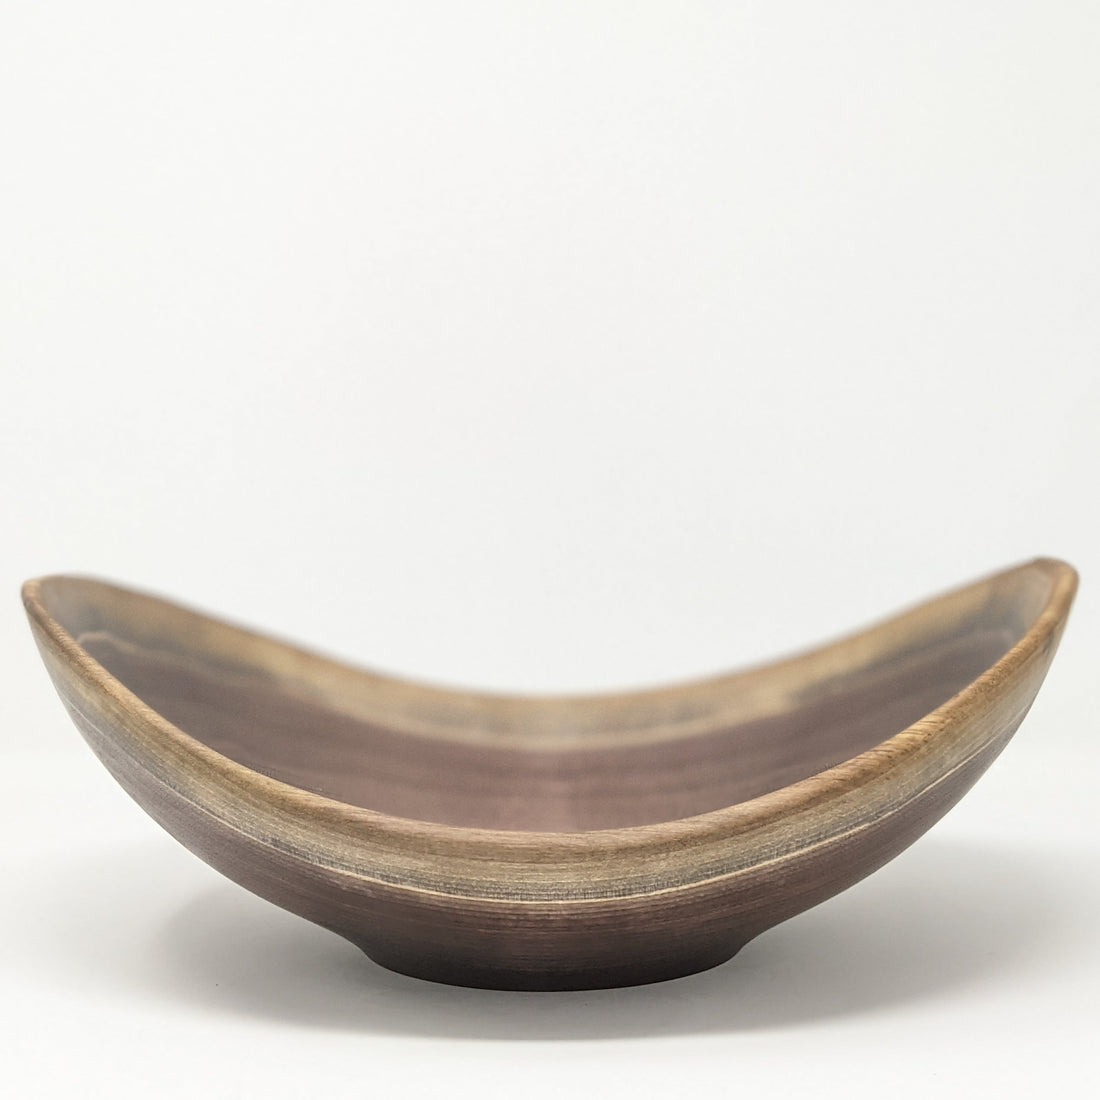  handmade wood bowl with a live edge